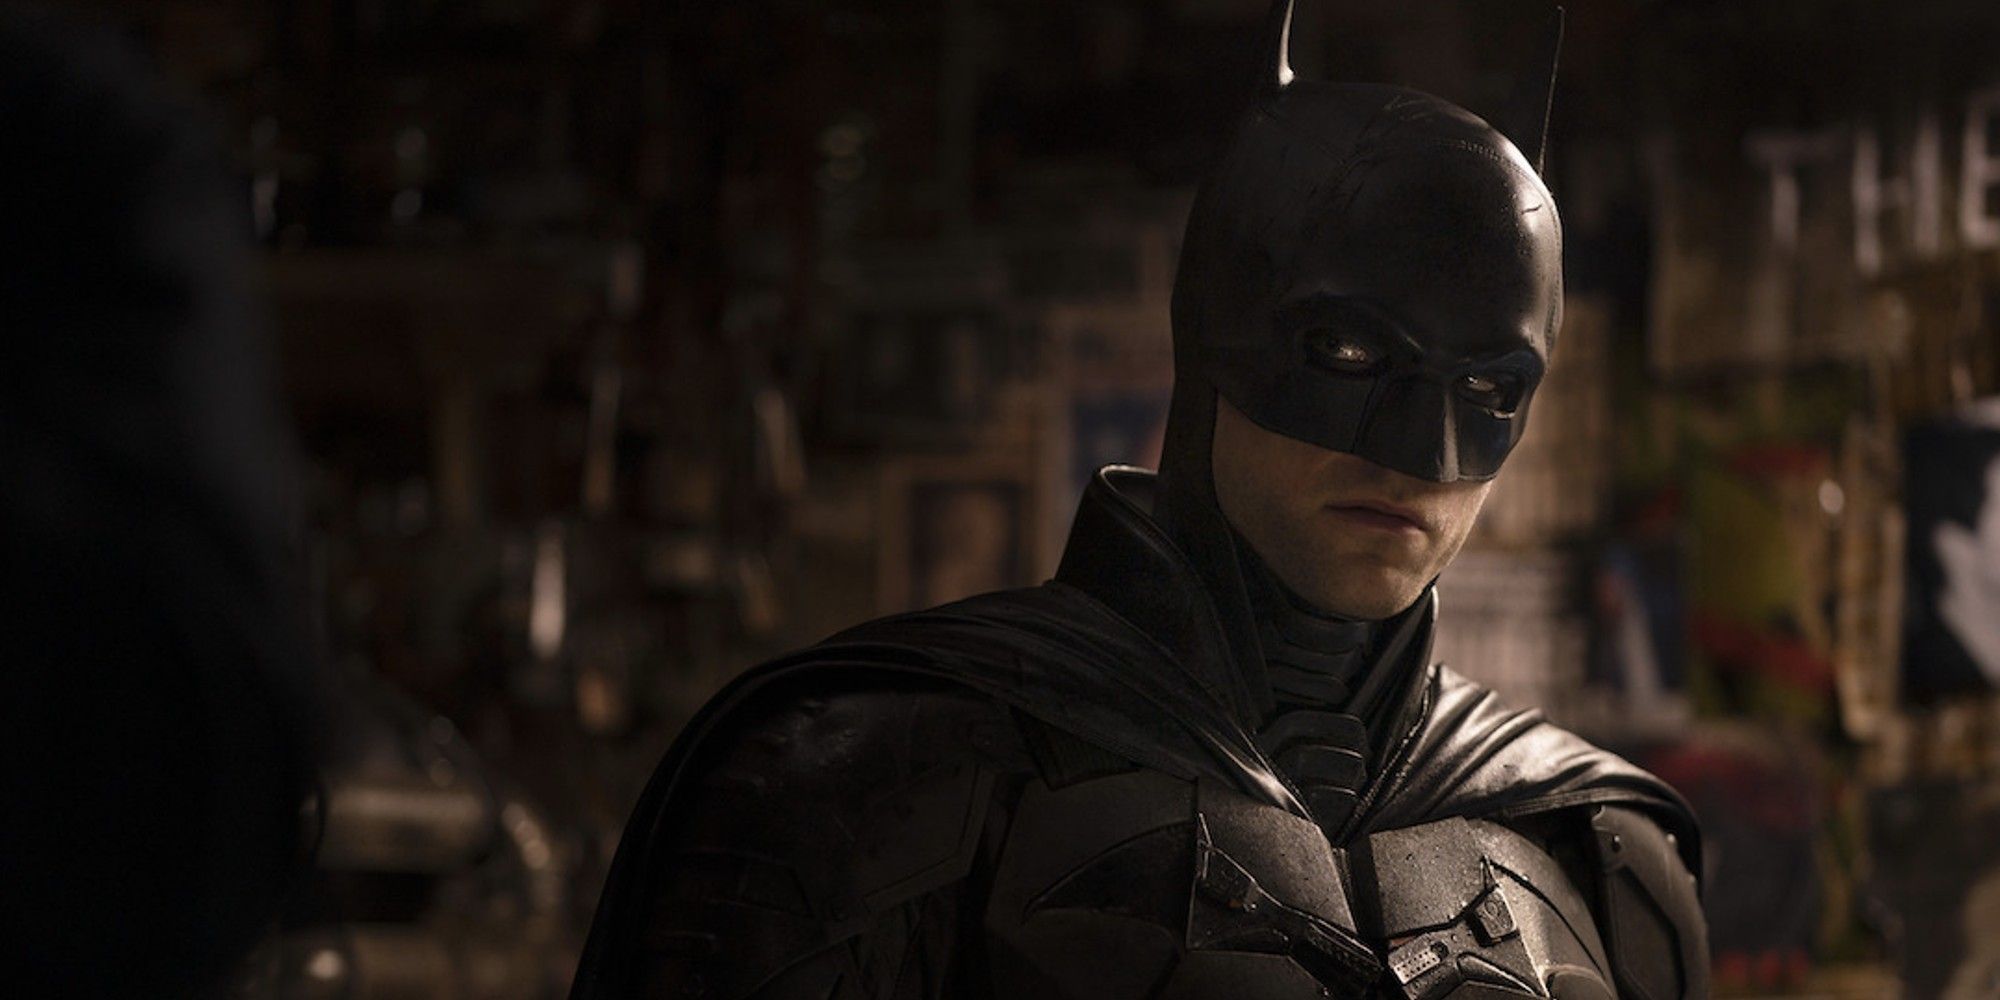 Robert Pattinson's Bruce Wayne in his Batman costume in The Batman